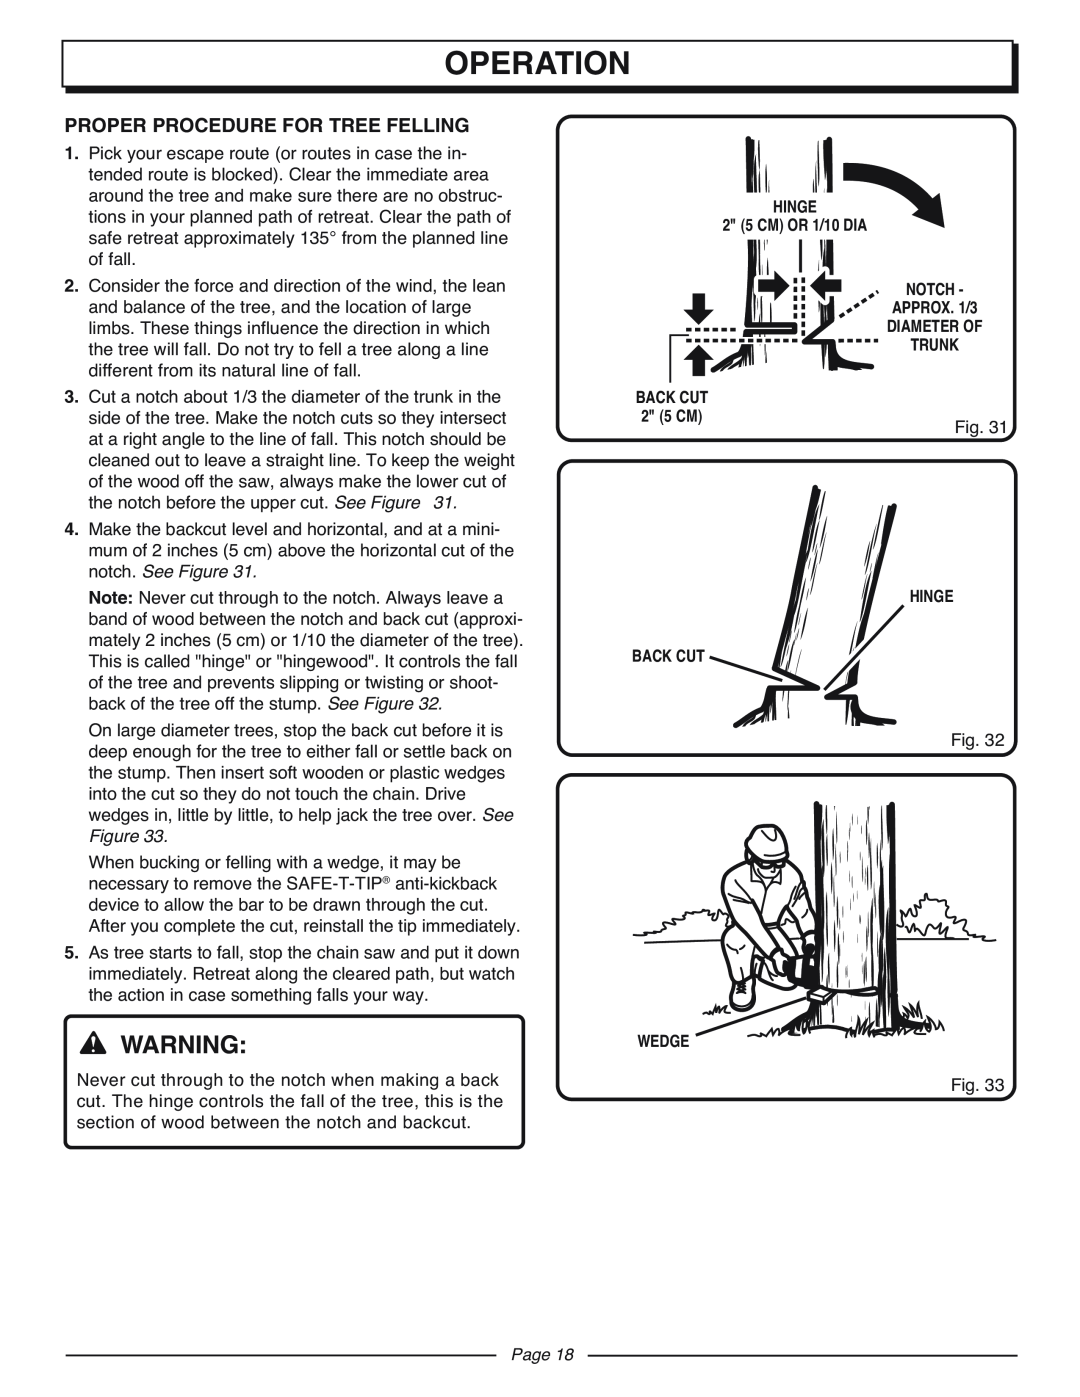 Homelite UT10927A Proper Procedure For Tree Felling, HINGE 2 5 CM OR 1/10 DIA NOTCH APPROX. 1/3 DIAMETER OF TRUNK BACK CUT 